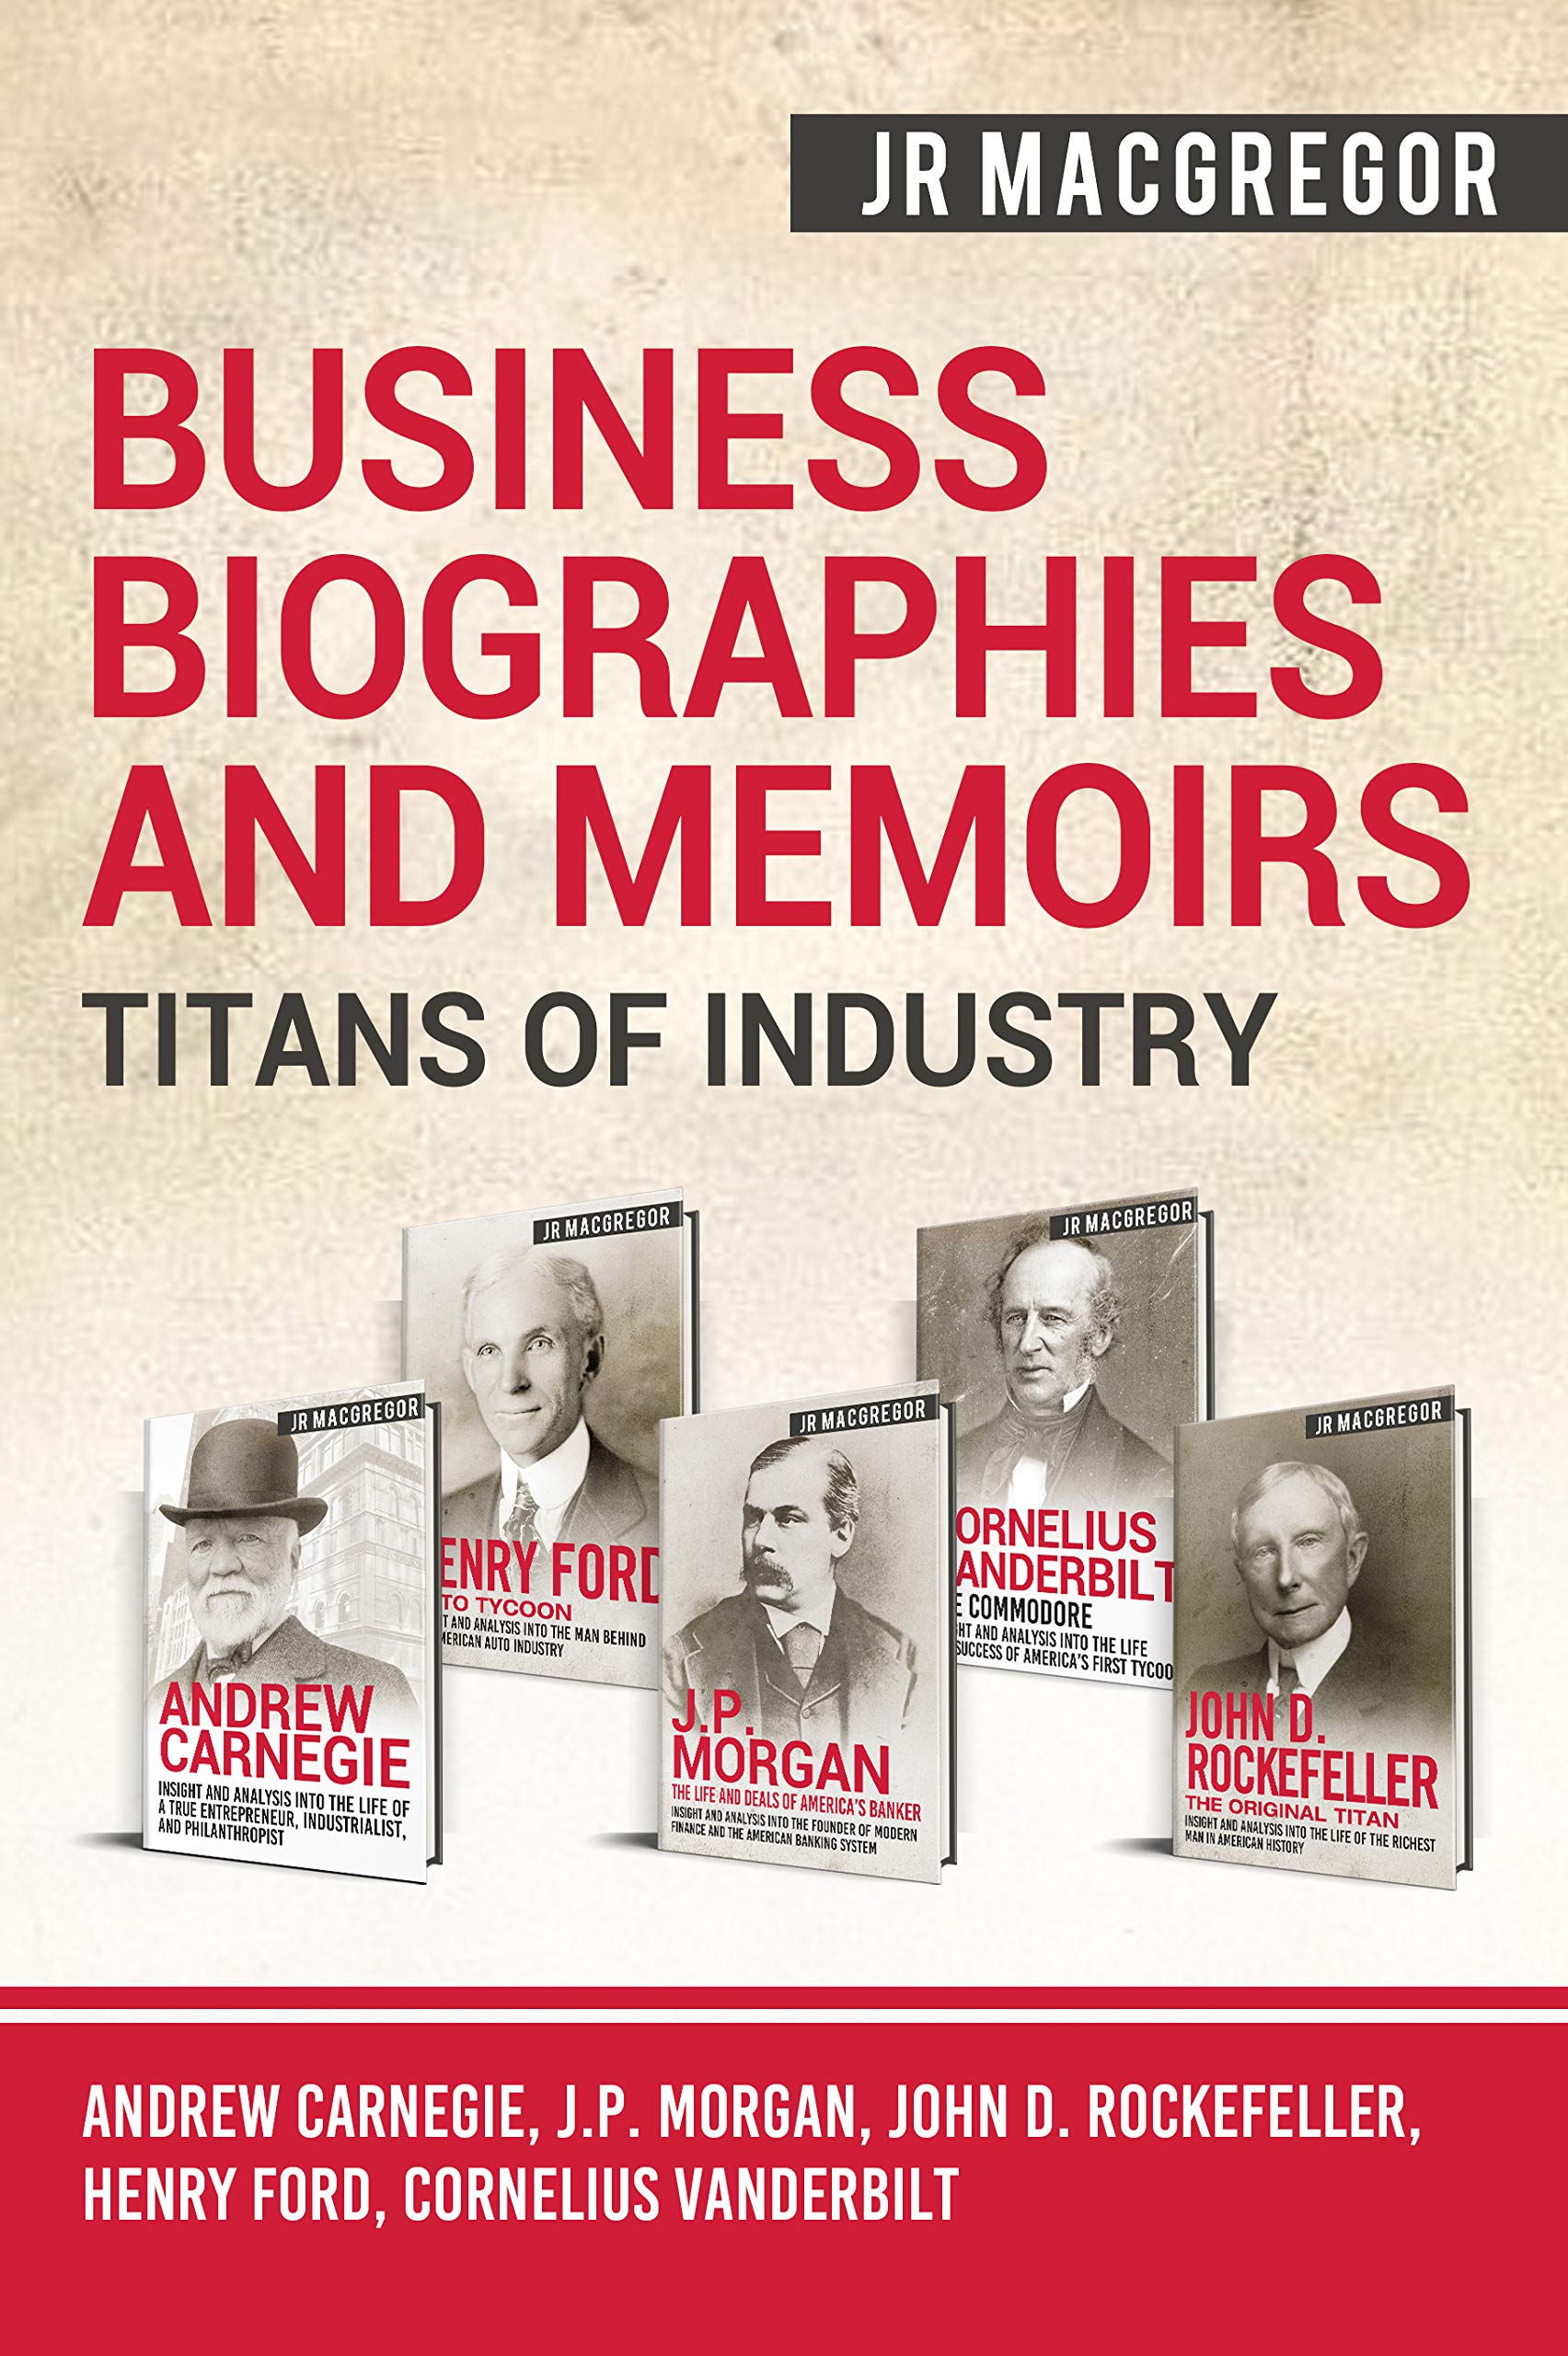 Business Biographies and Memoirs – Titans of Industry: Andrew Carnegie, J.P. Morgan, John D. Rockefeller, Henry Ford, Cornelius Vanderbilt